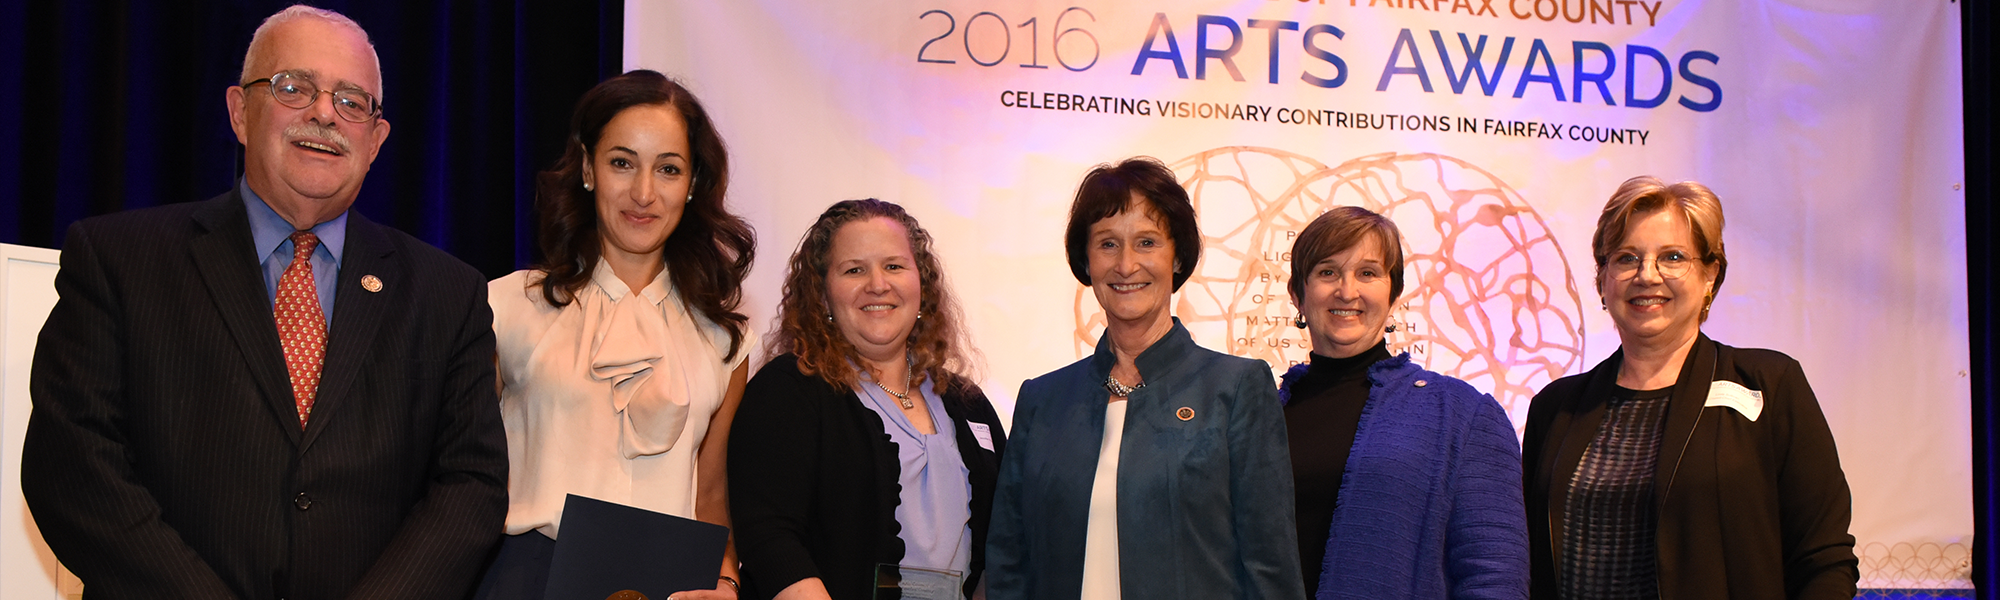 Arts Council of Fairfax County Presents the 2016 Arts Awards